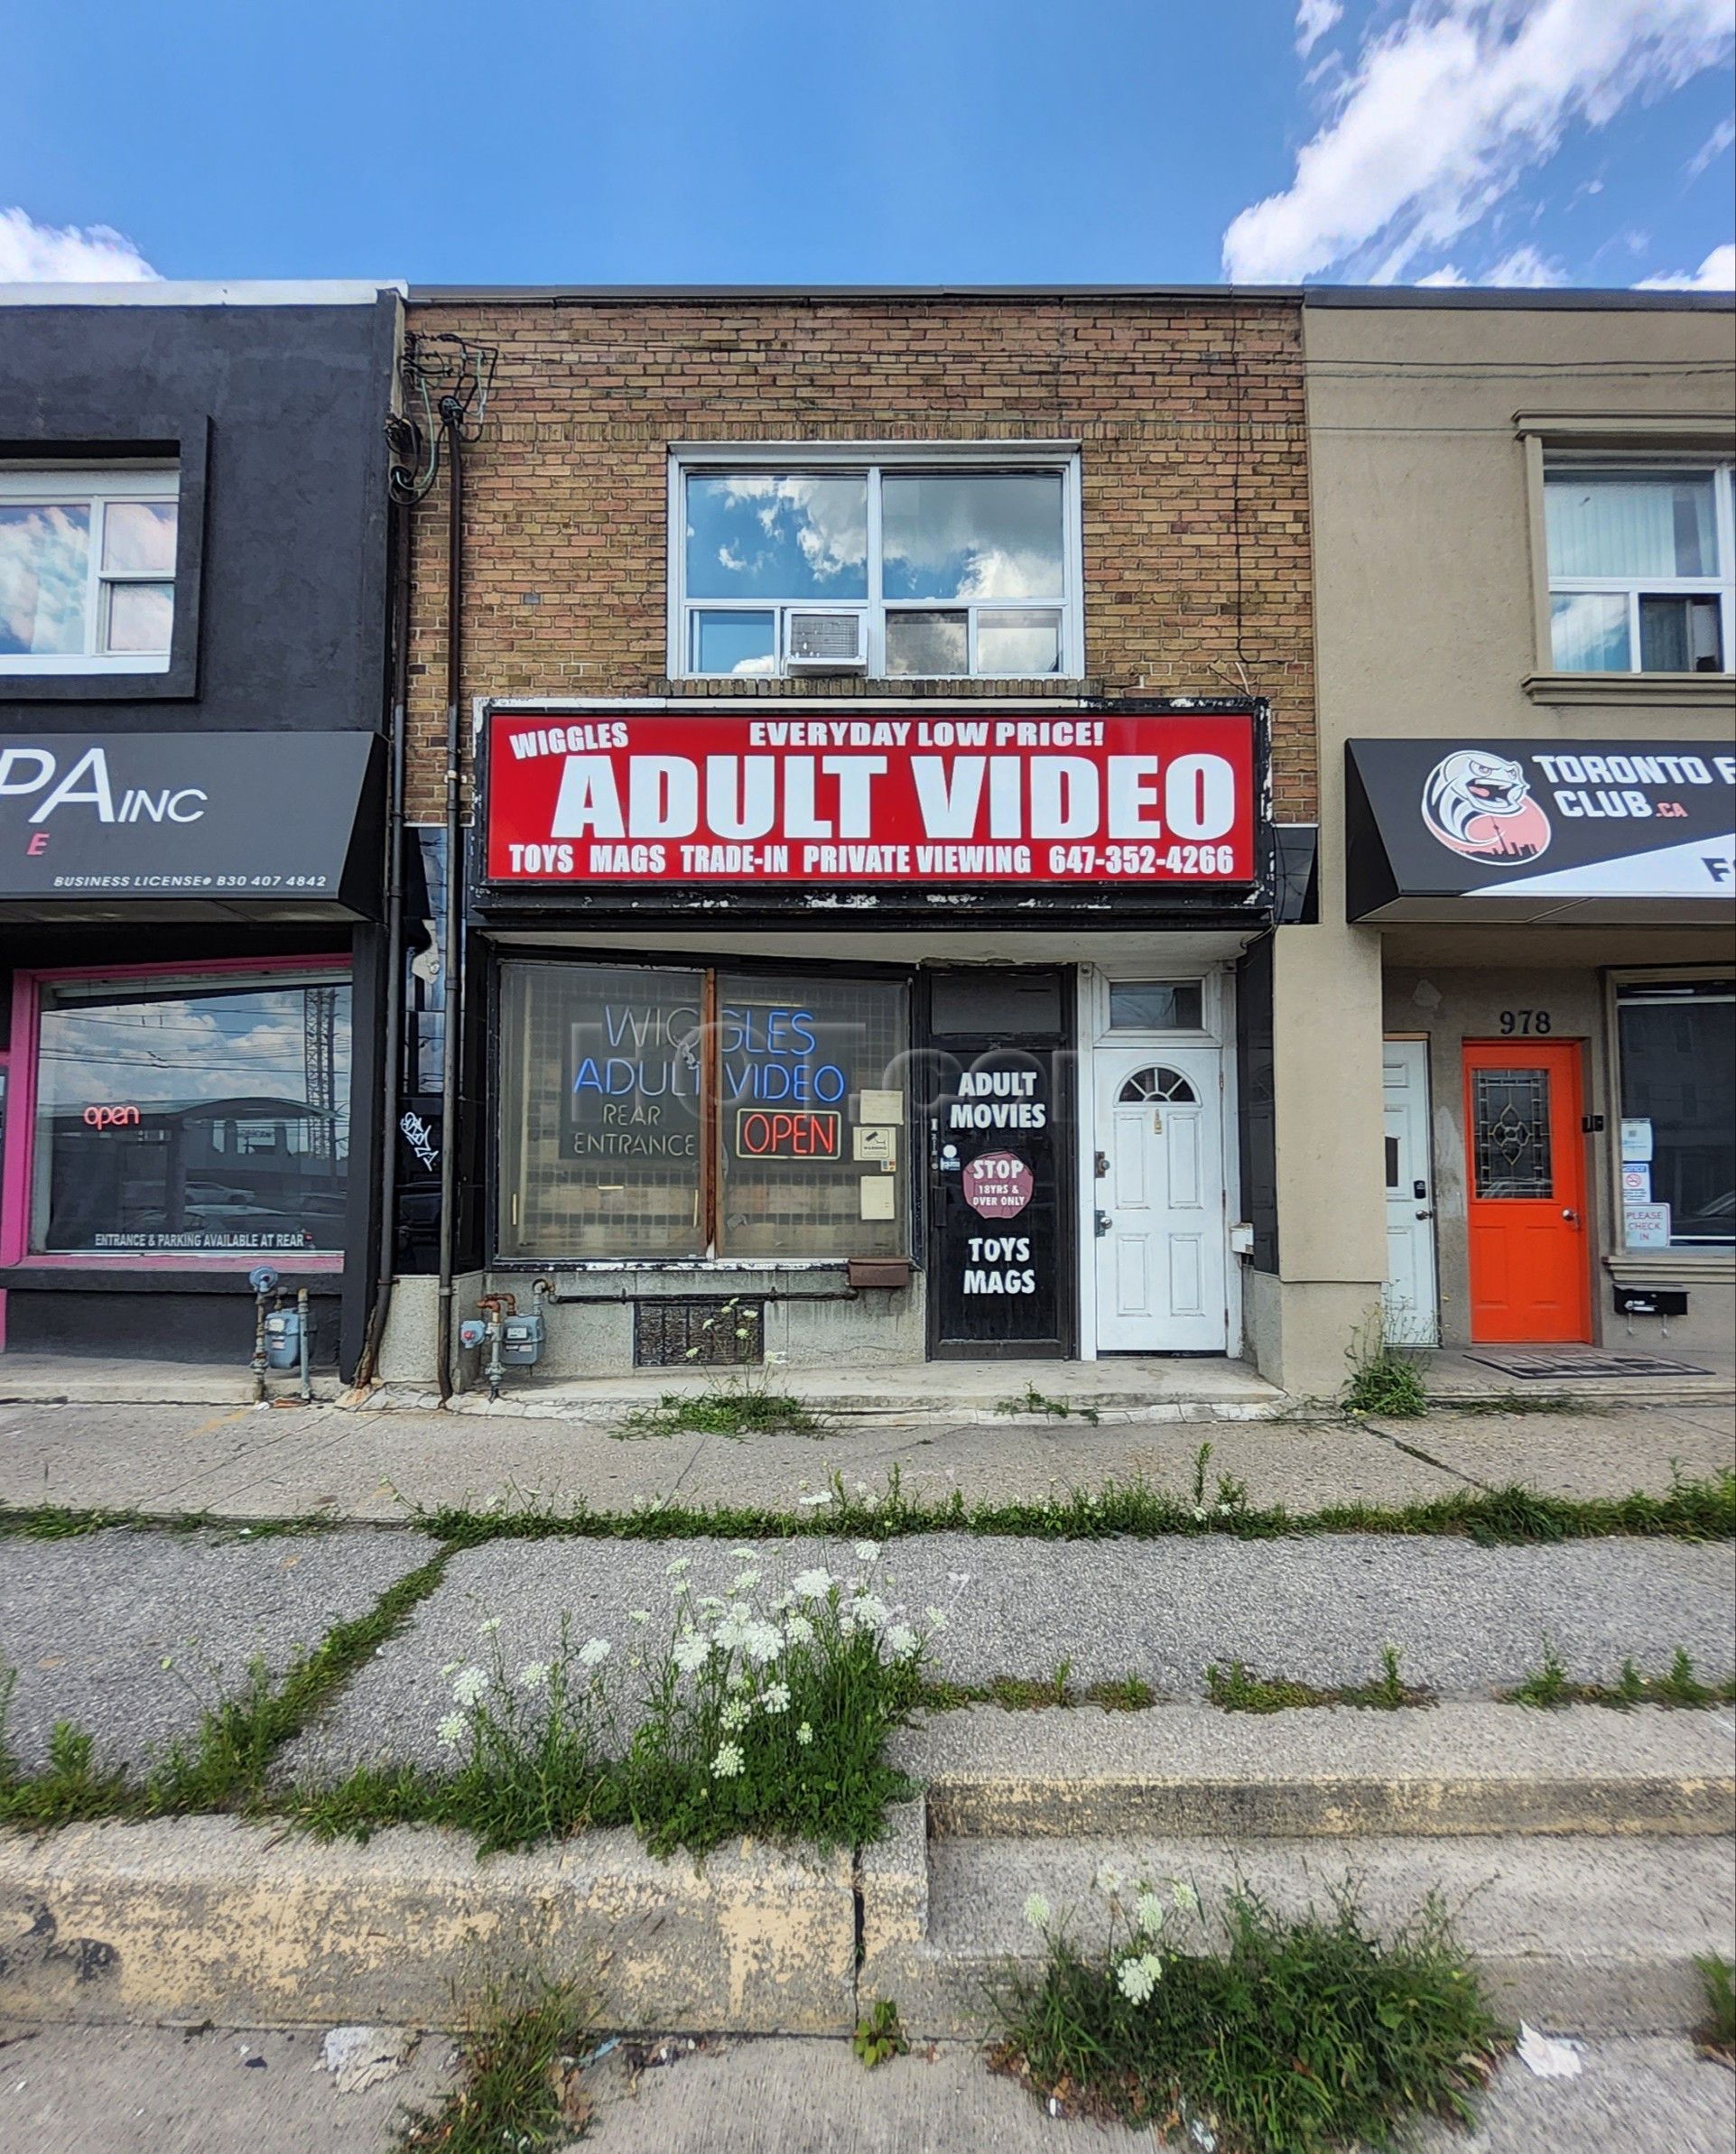 Etobicoke, Ontario Wiggles Adult Video